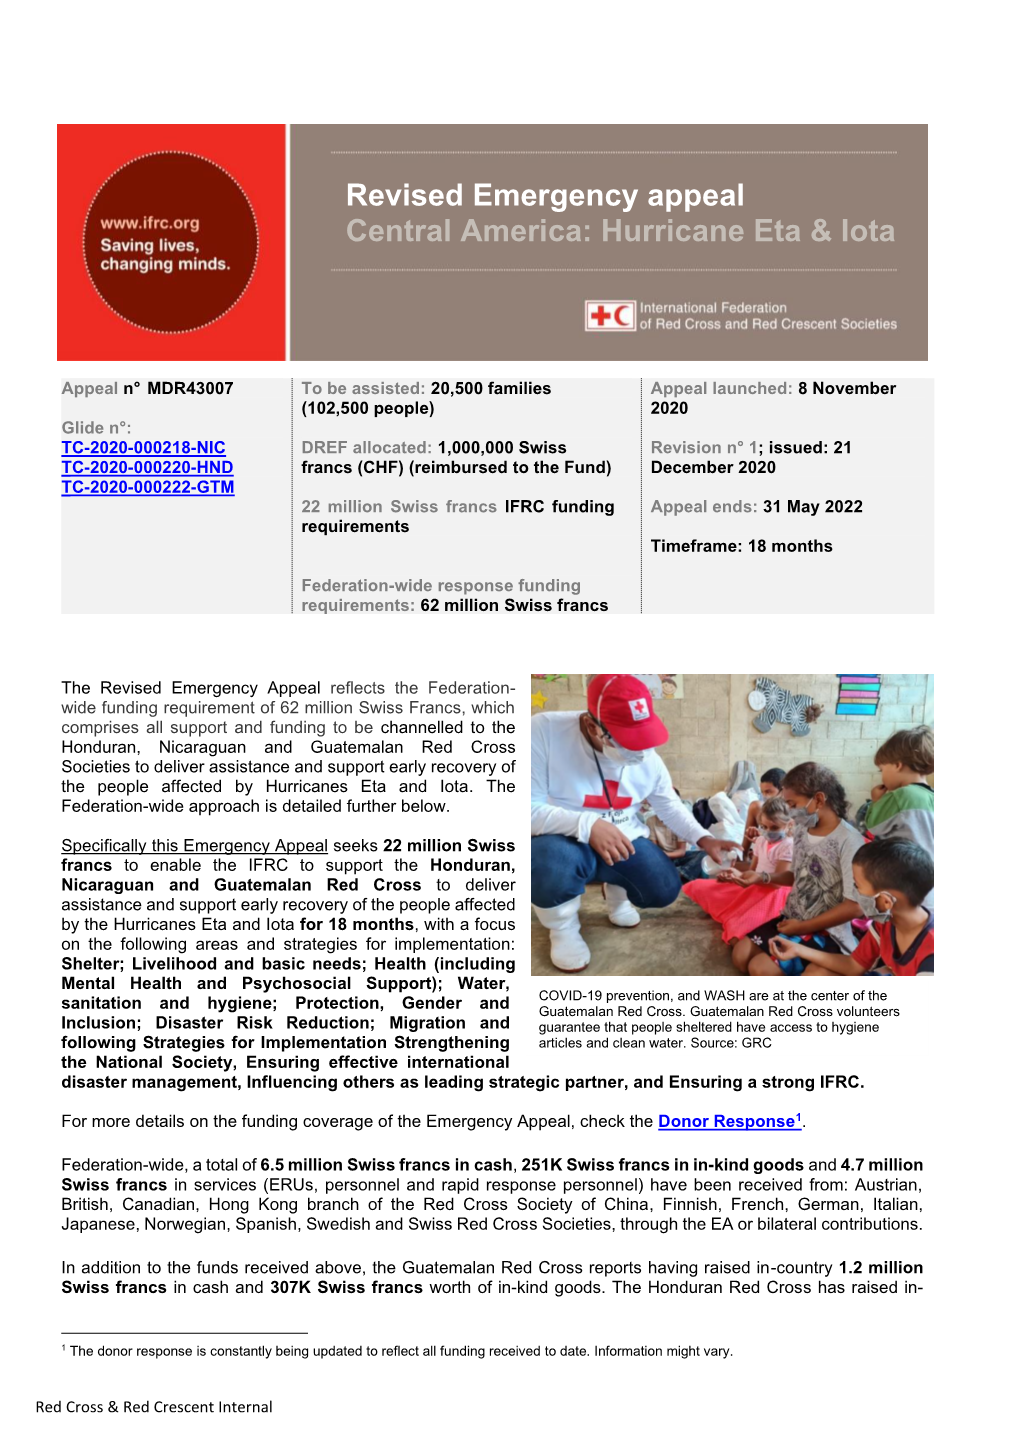 Revised Emergency Appeal Central America: Hurricane Eta & Iota